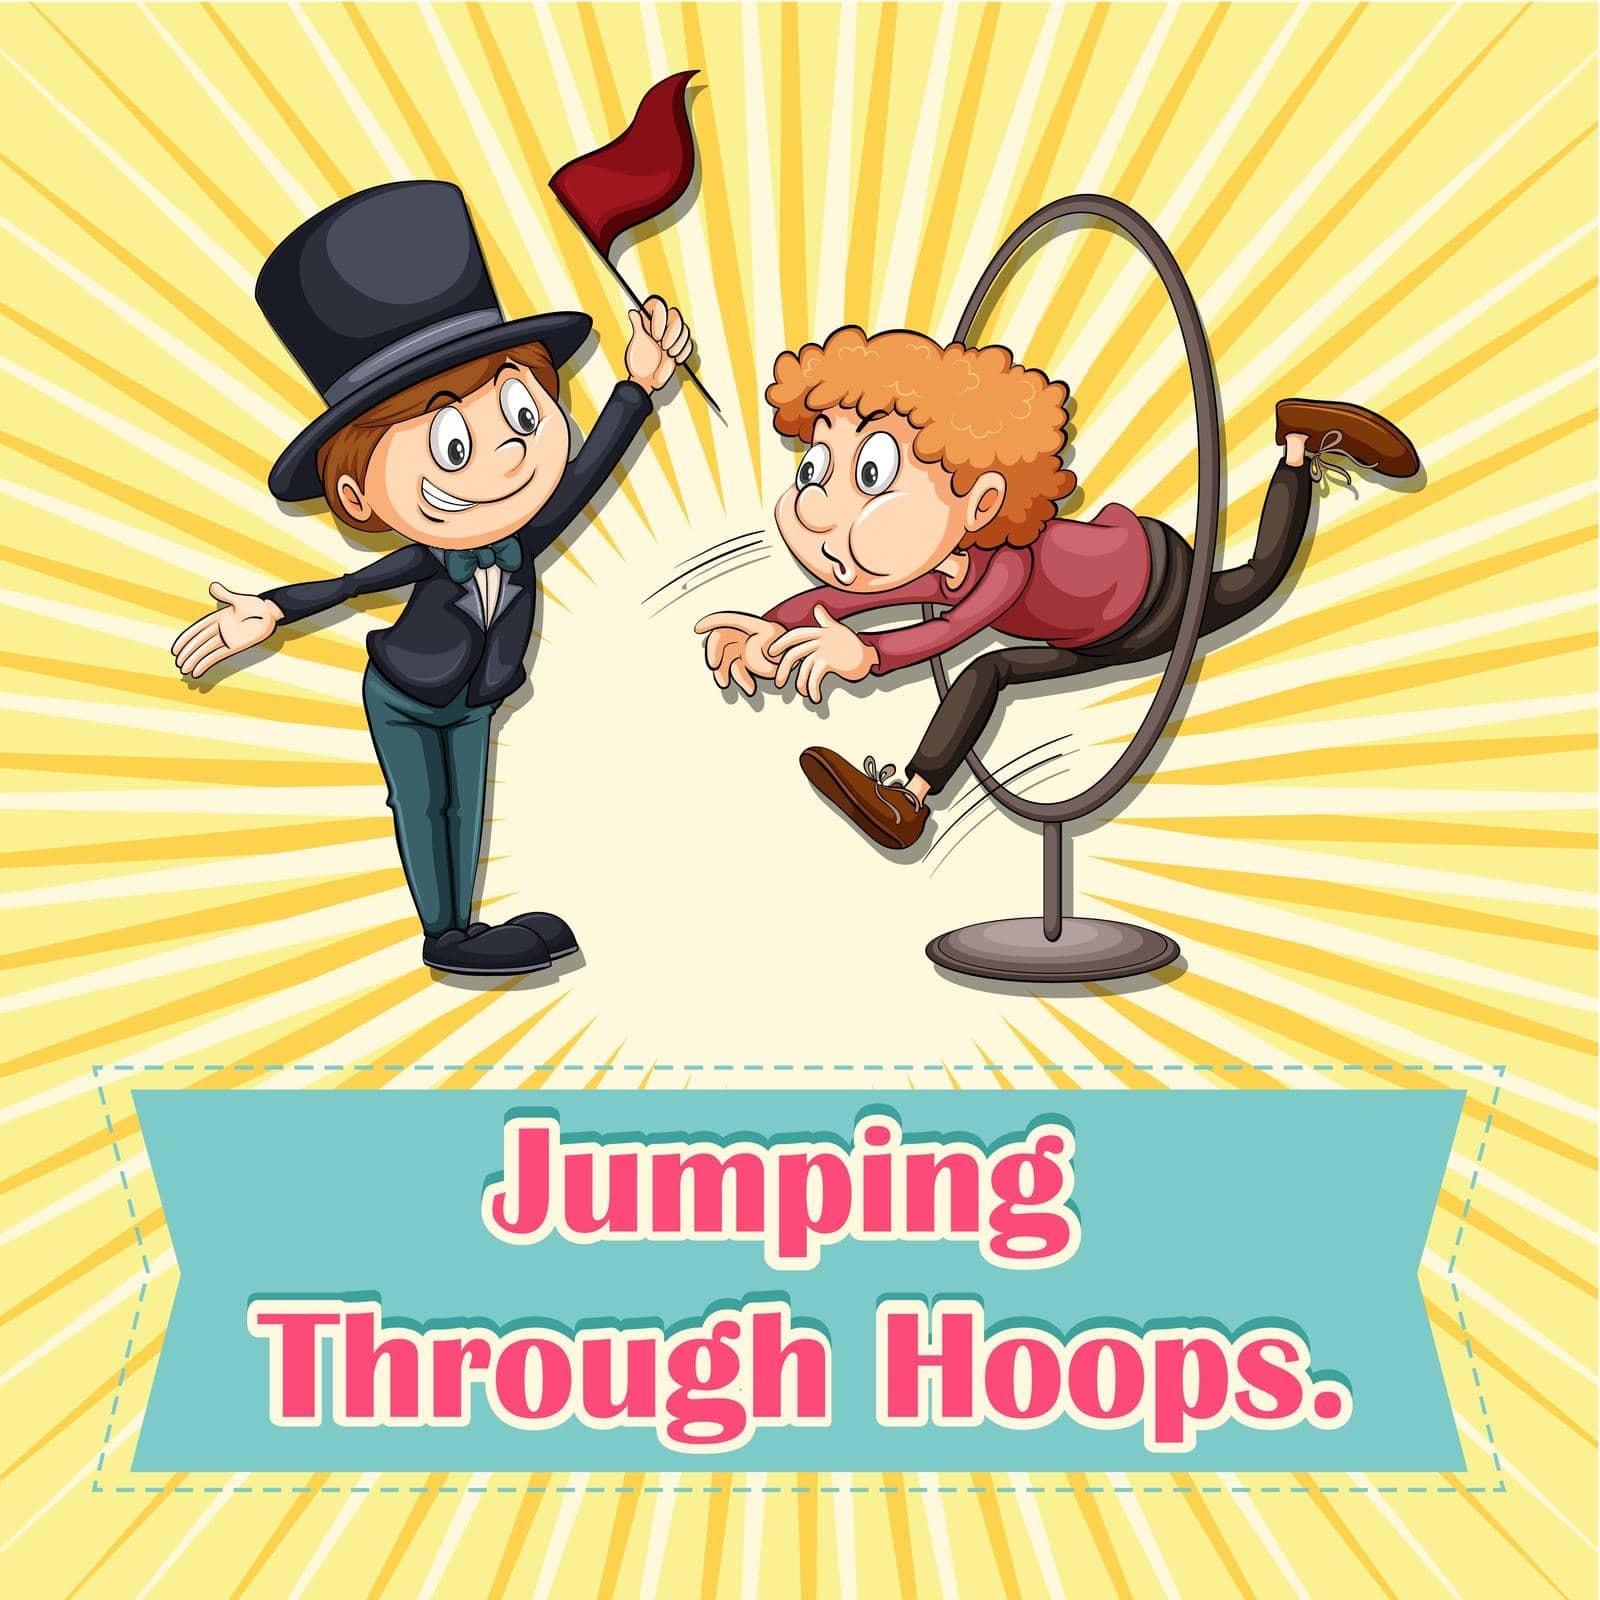 Idiom saying jumping through hoops